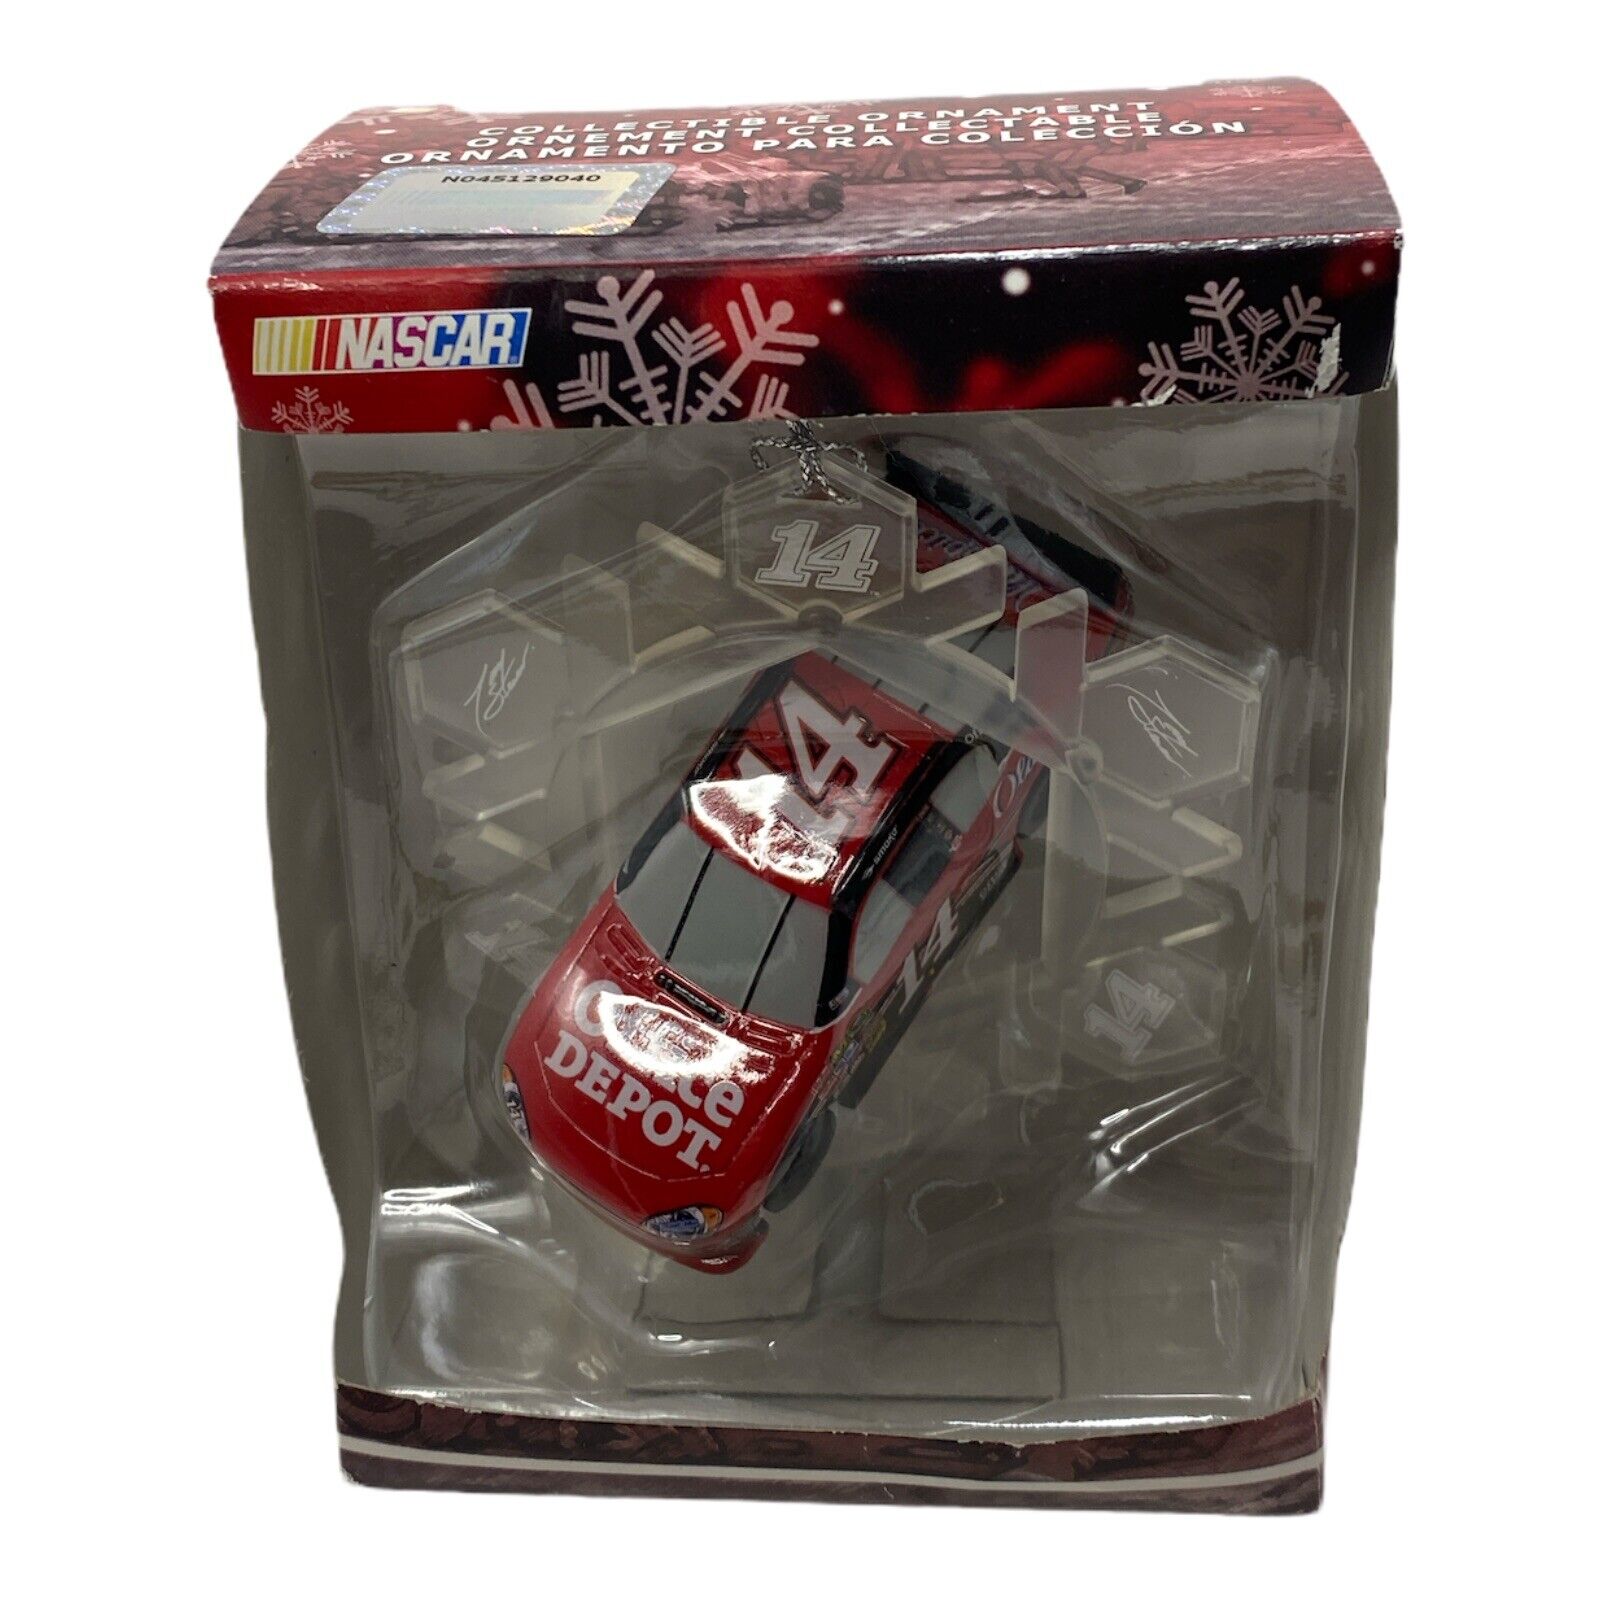 NASCAR Tony Stewart 14 Car Christmas Ornament - New in Box 2010 Issue